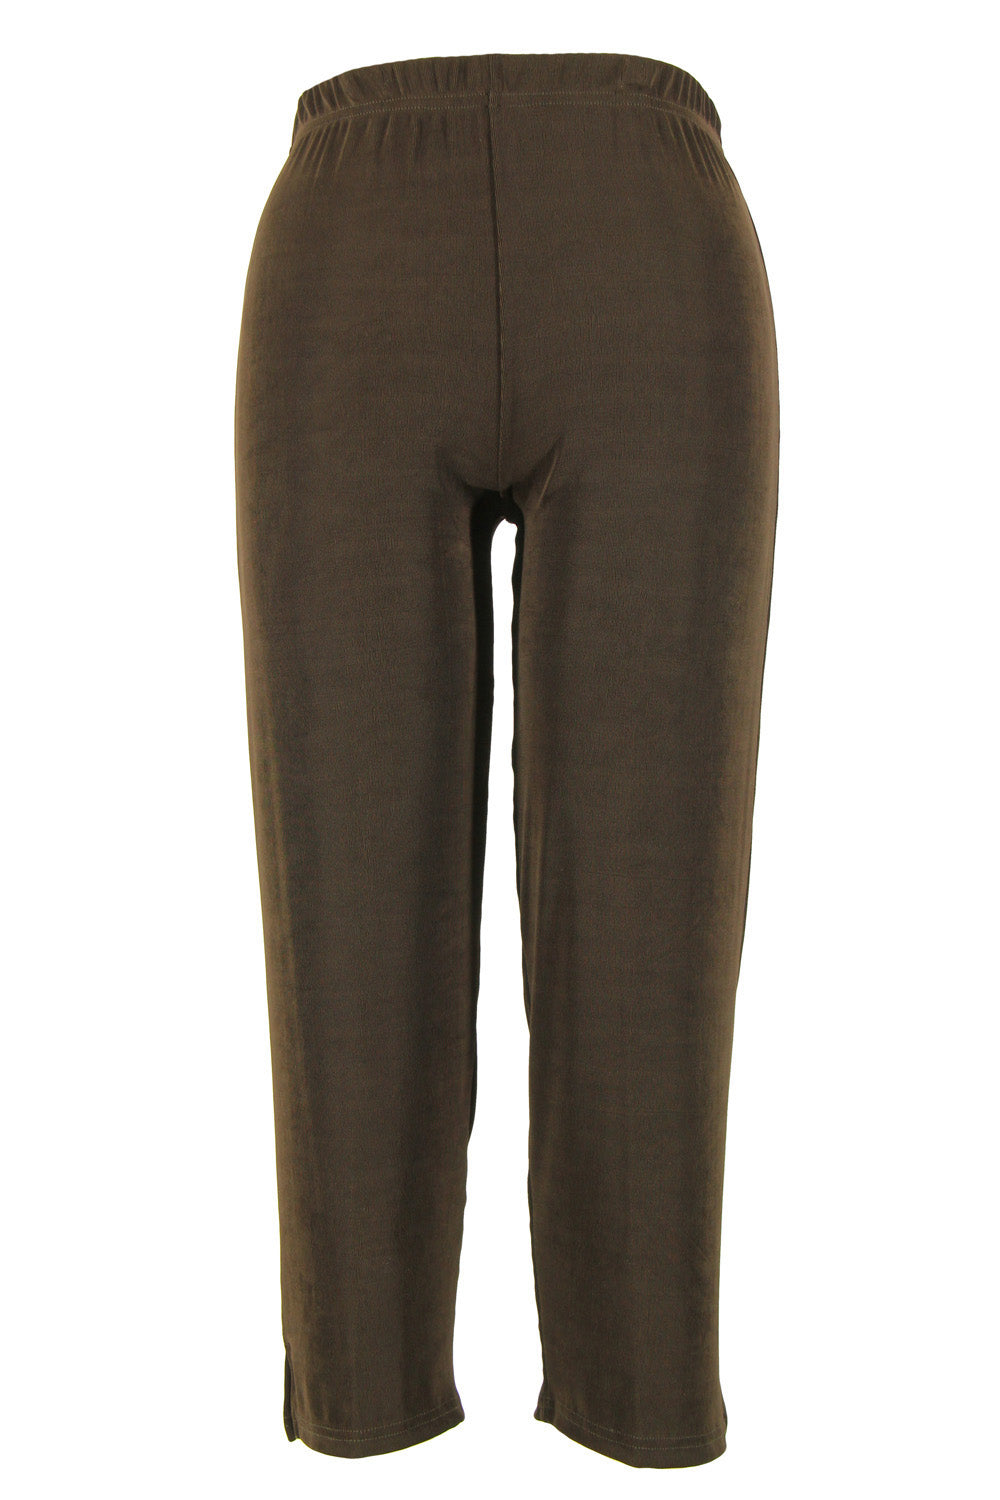 Jostar Women's Non Iron Ankle Length Pants Plus, 501AY-X - Jostar Online